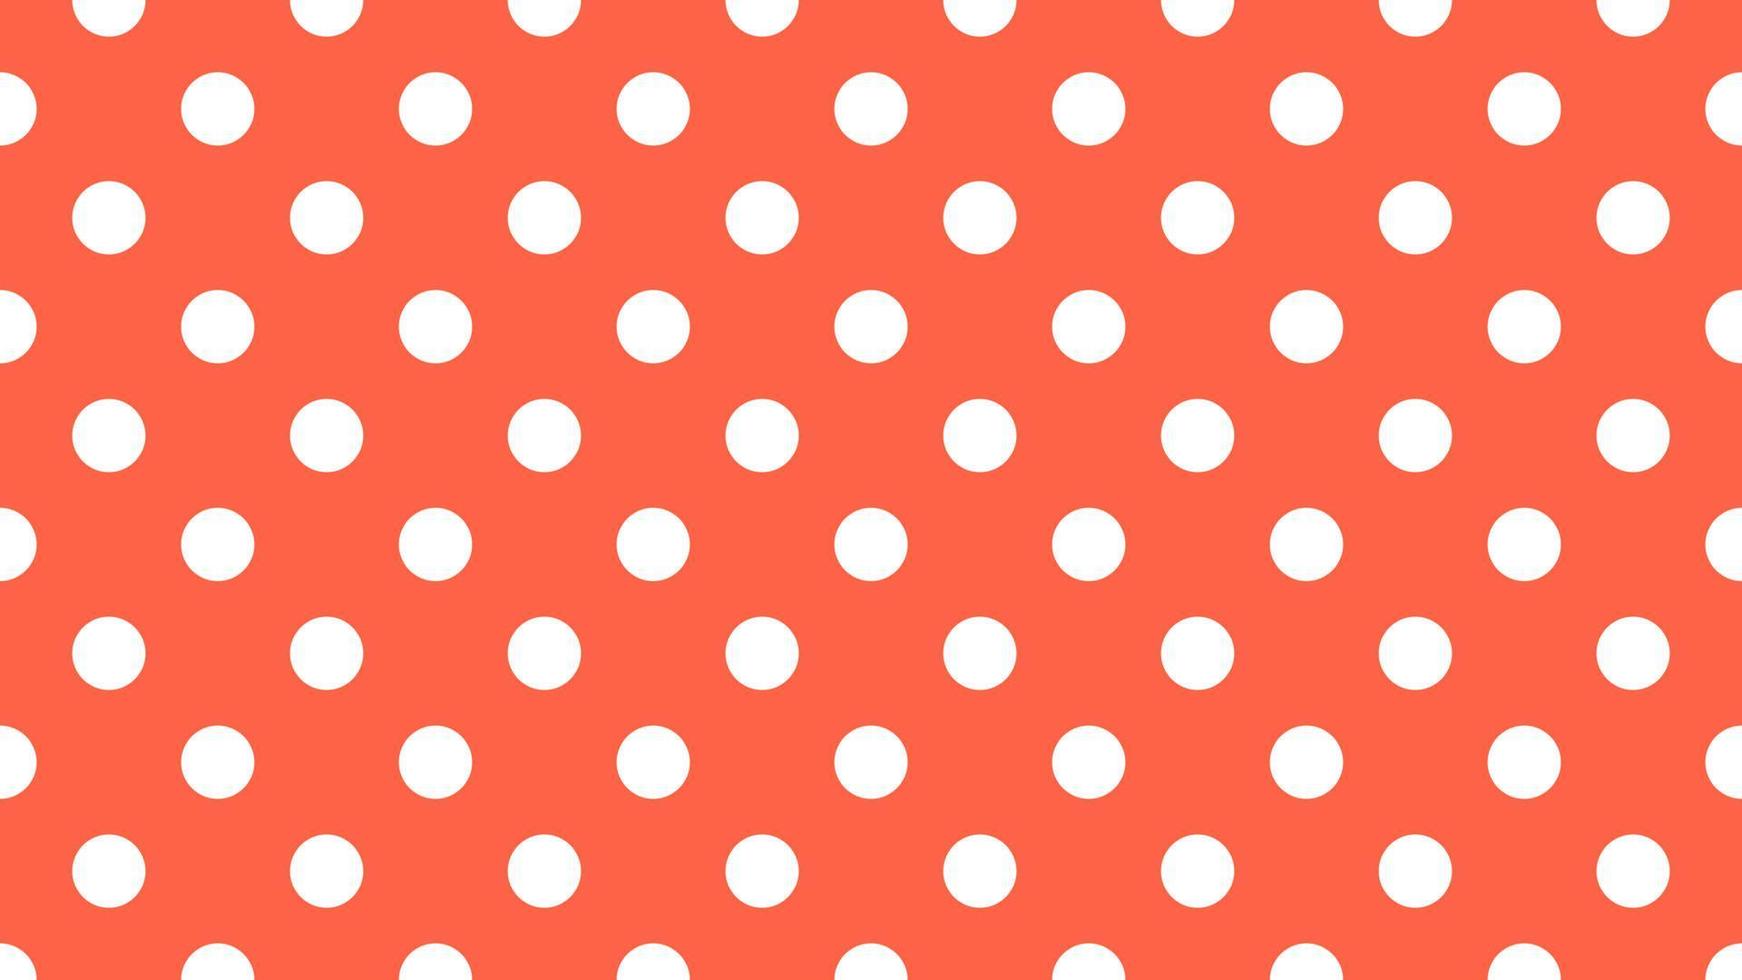 white color polka dots over tomato orange background vector